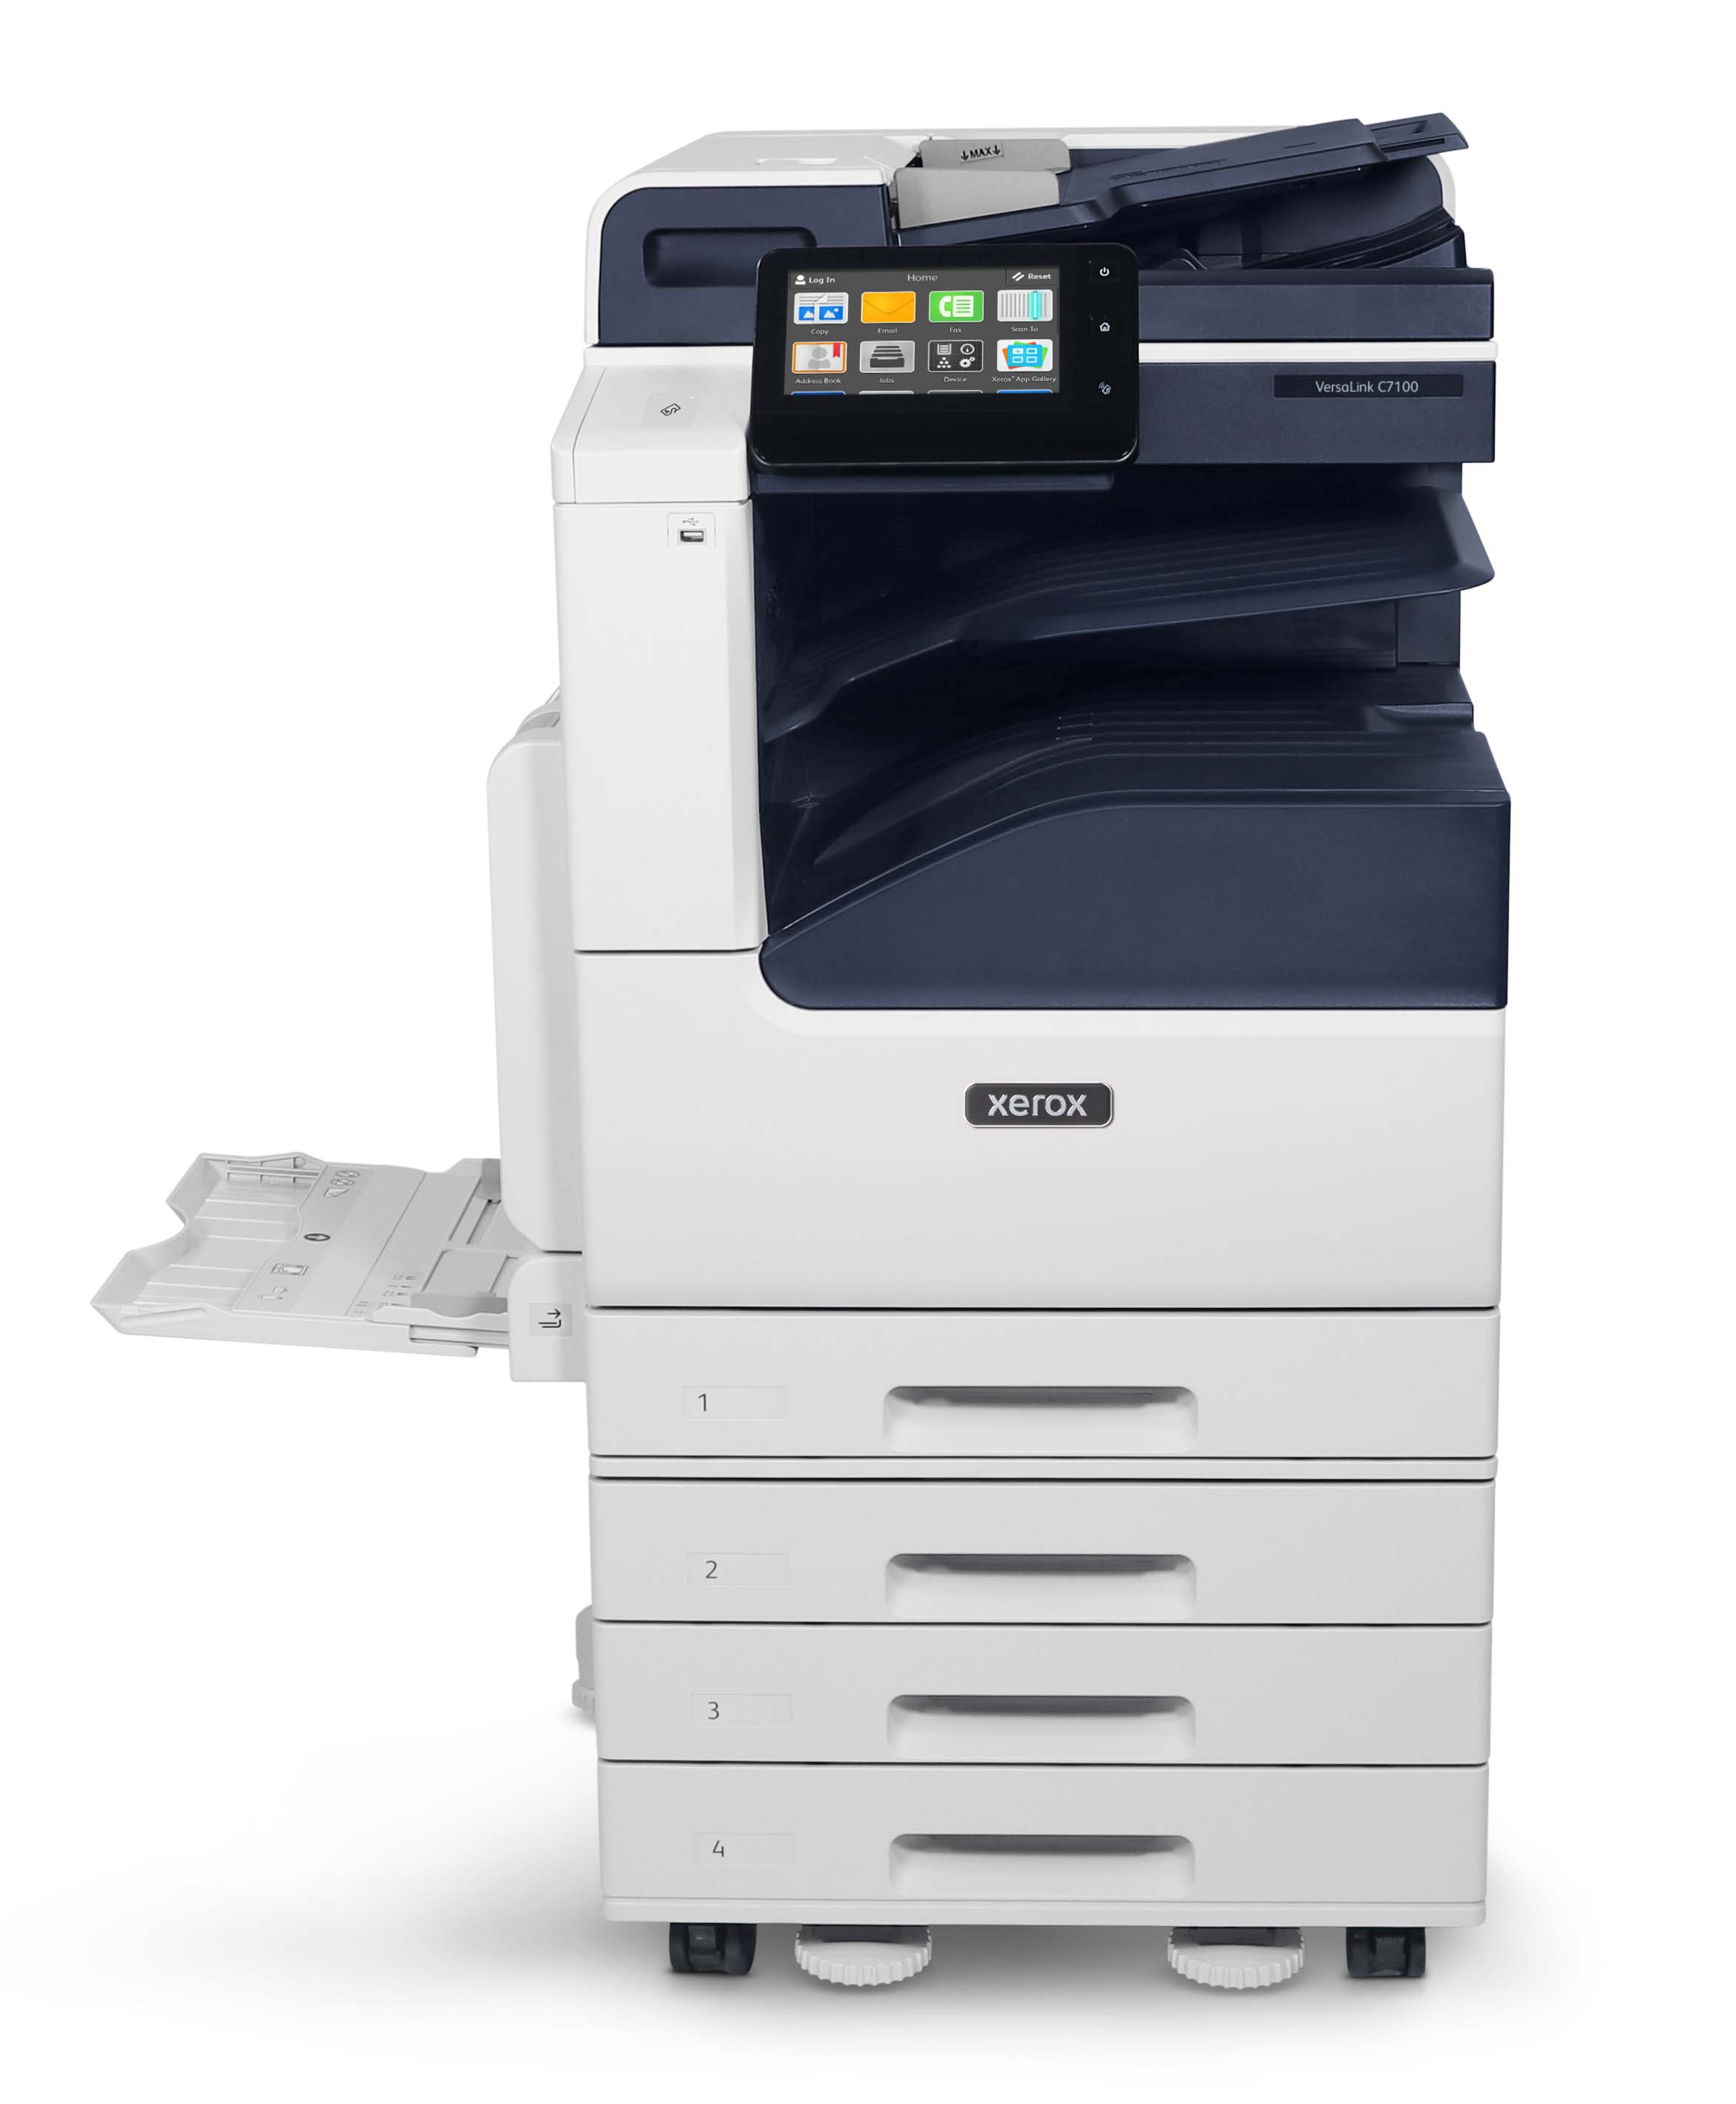 Xerox VersaLink C7130 Colour MultiFunction Printer - Four trays